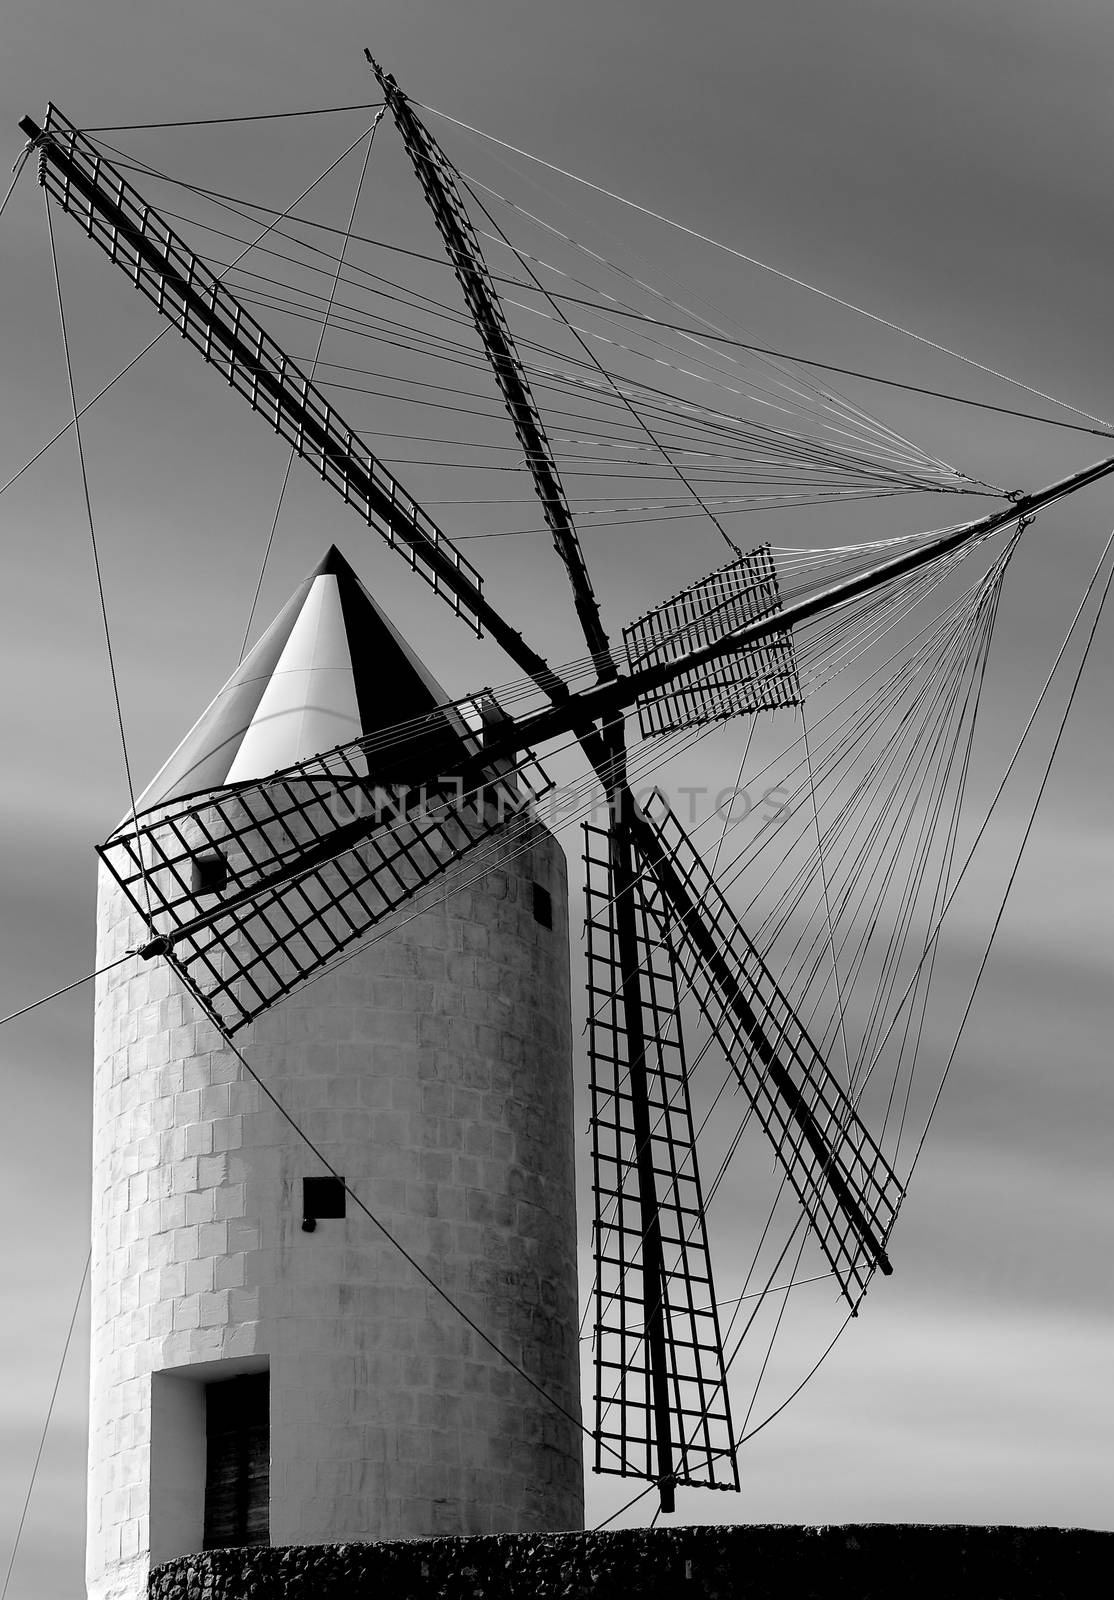 Old Spanish Windmill by zhekos